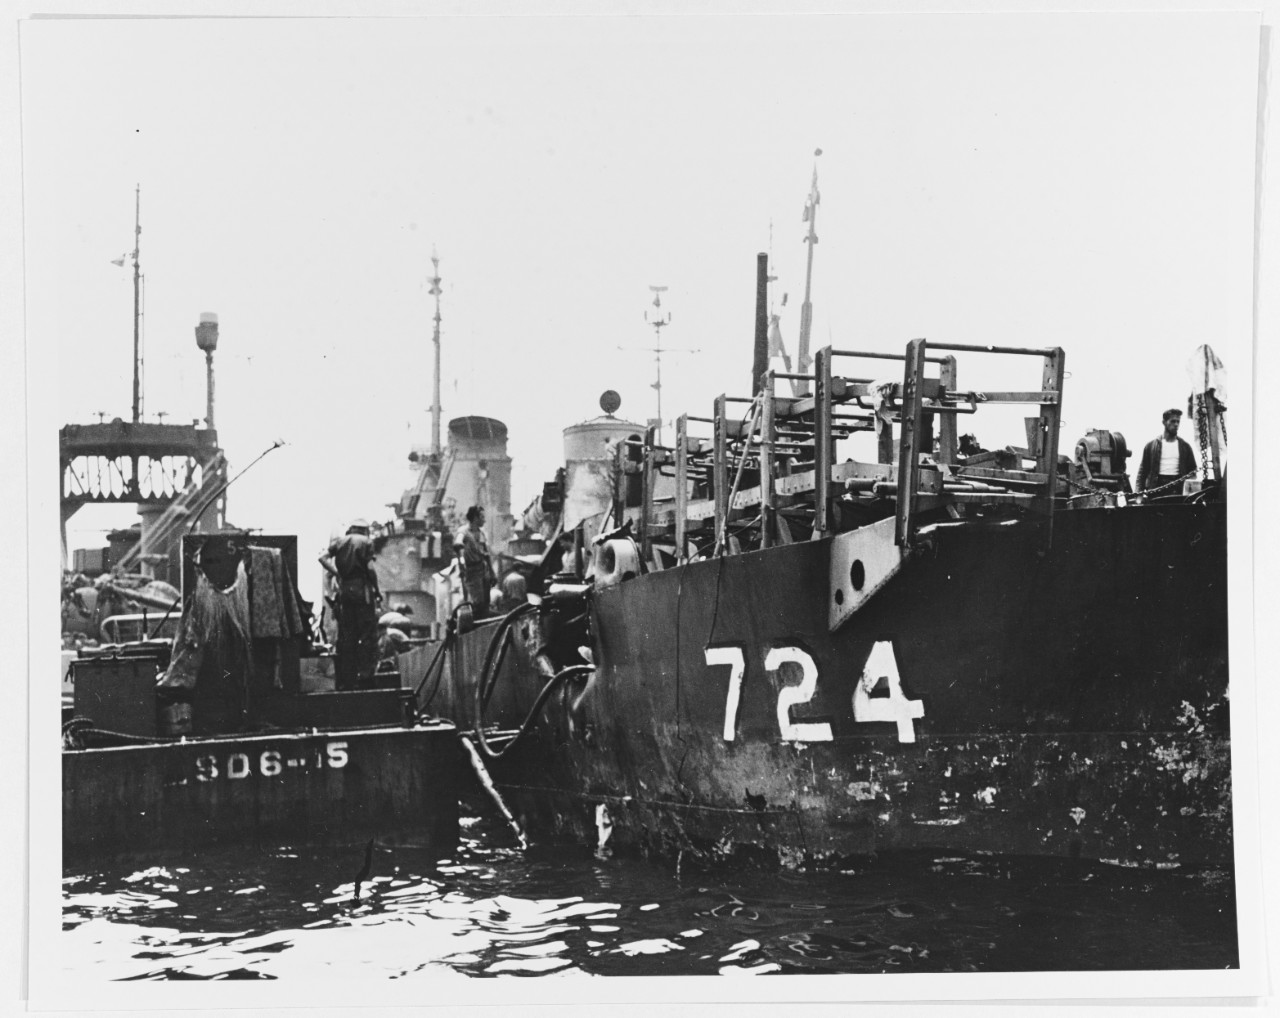 USS LAFFEY (DD-724) Severely Damaged